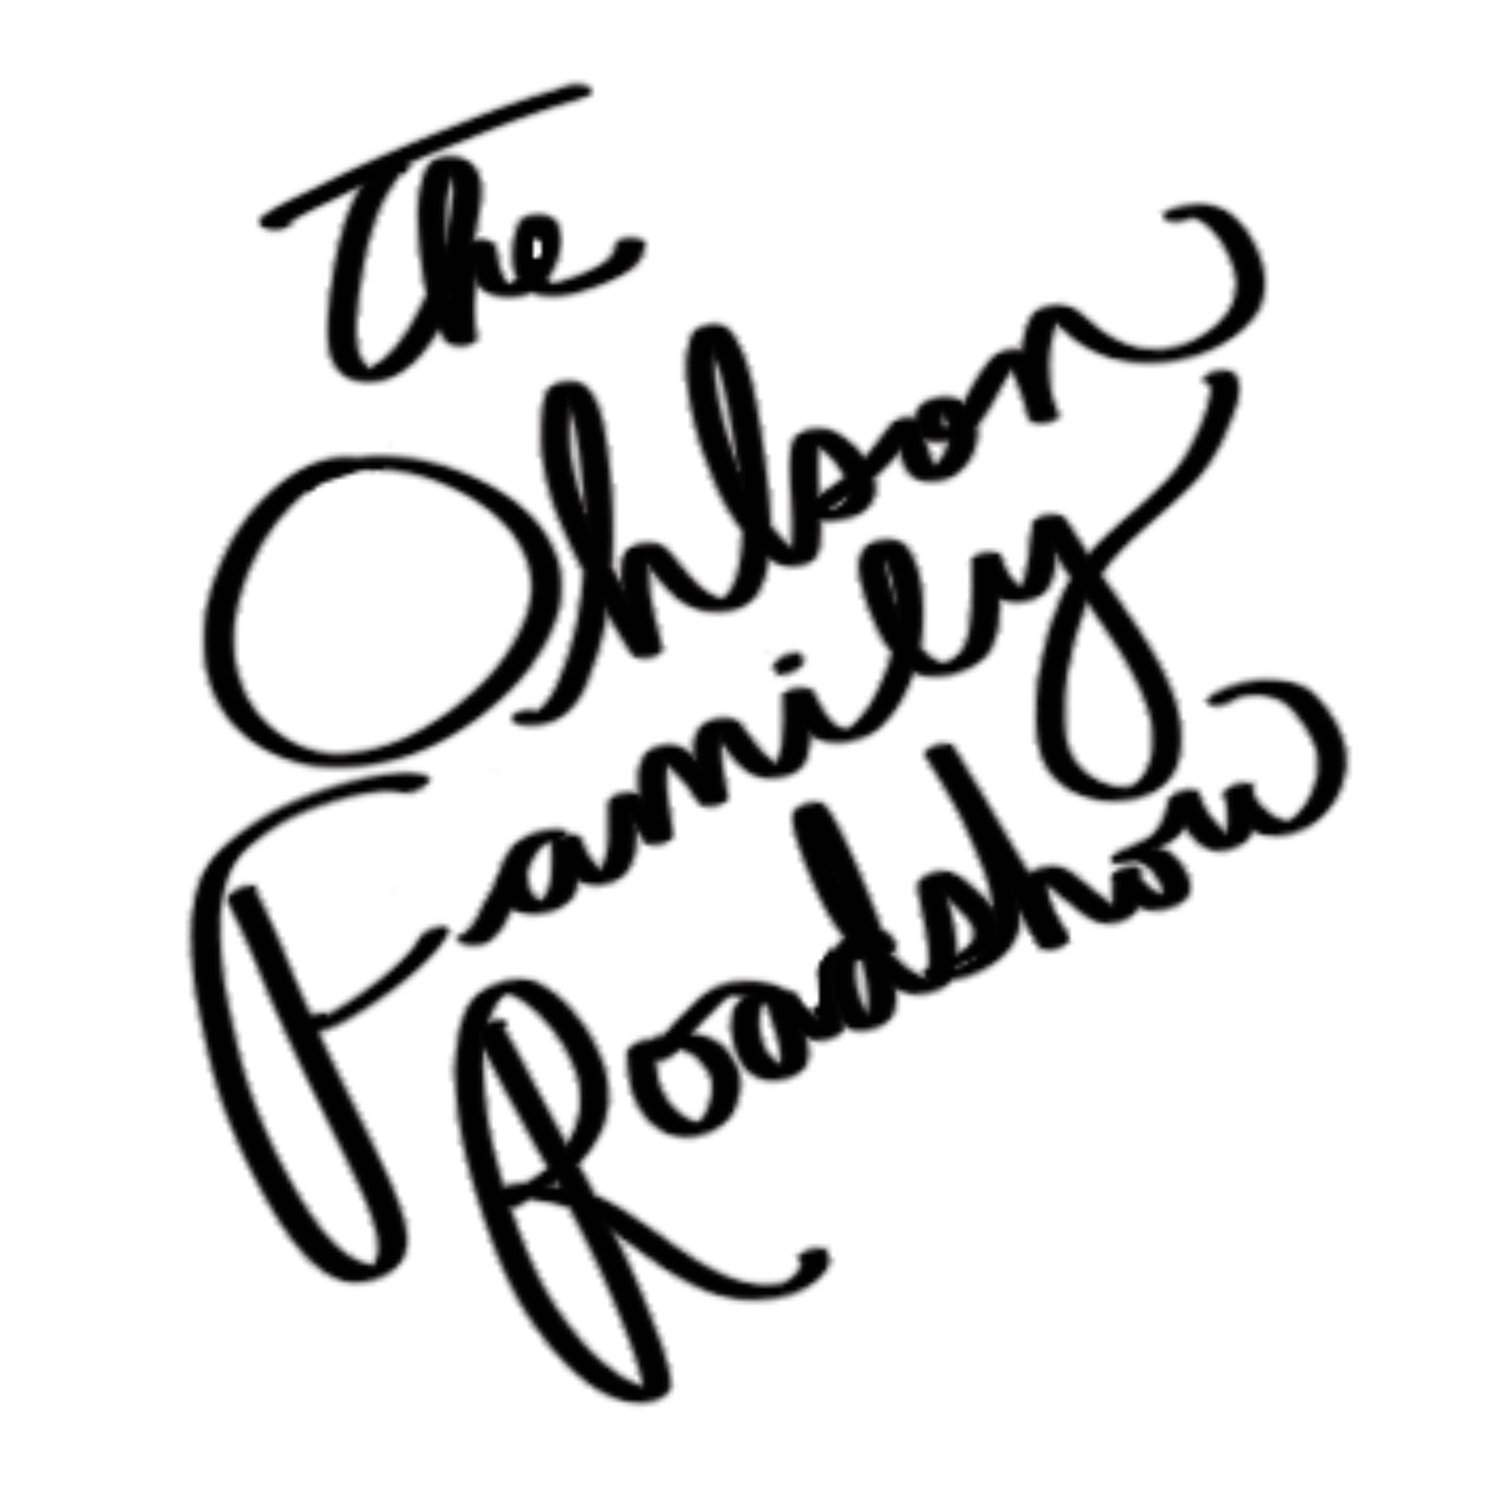 The Ohlson Family Roadshow